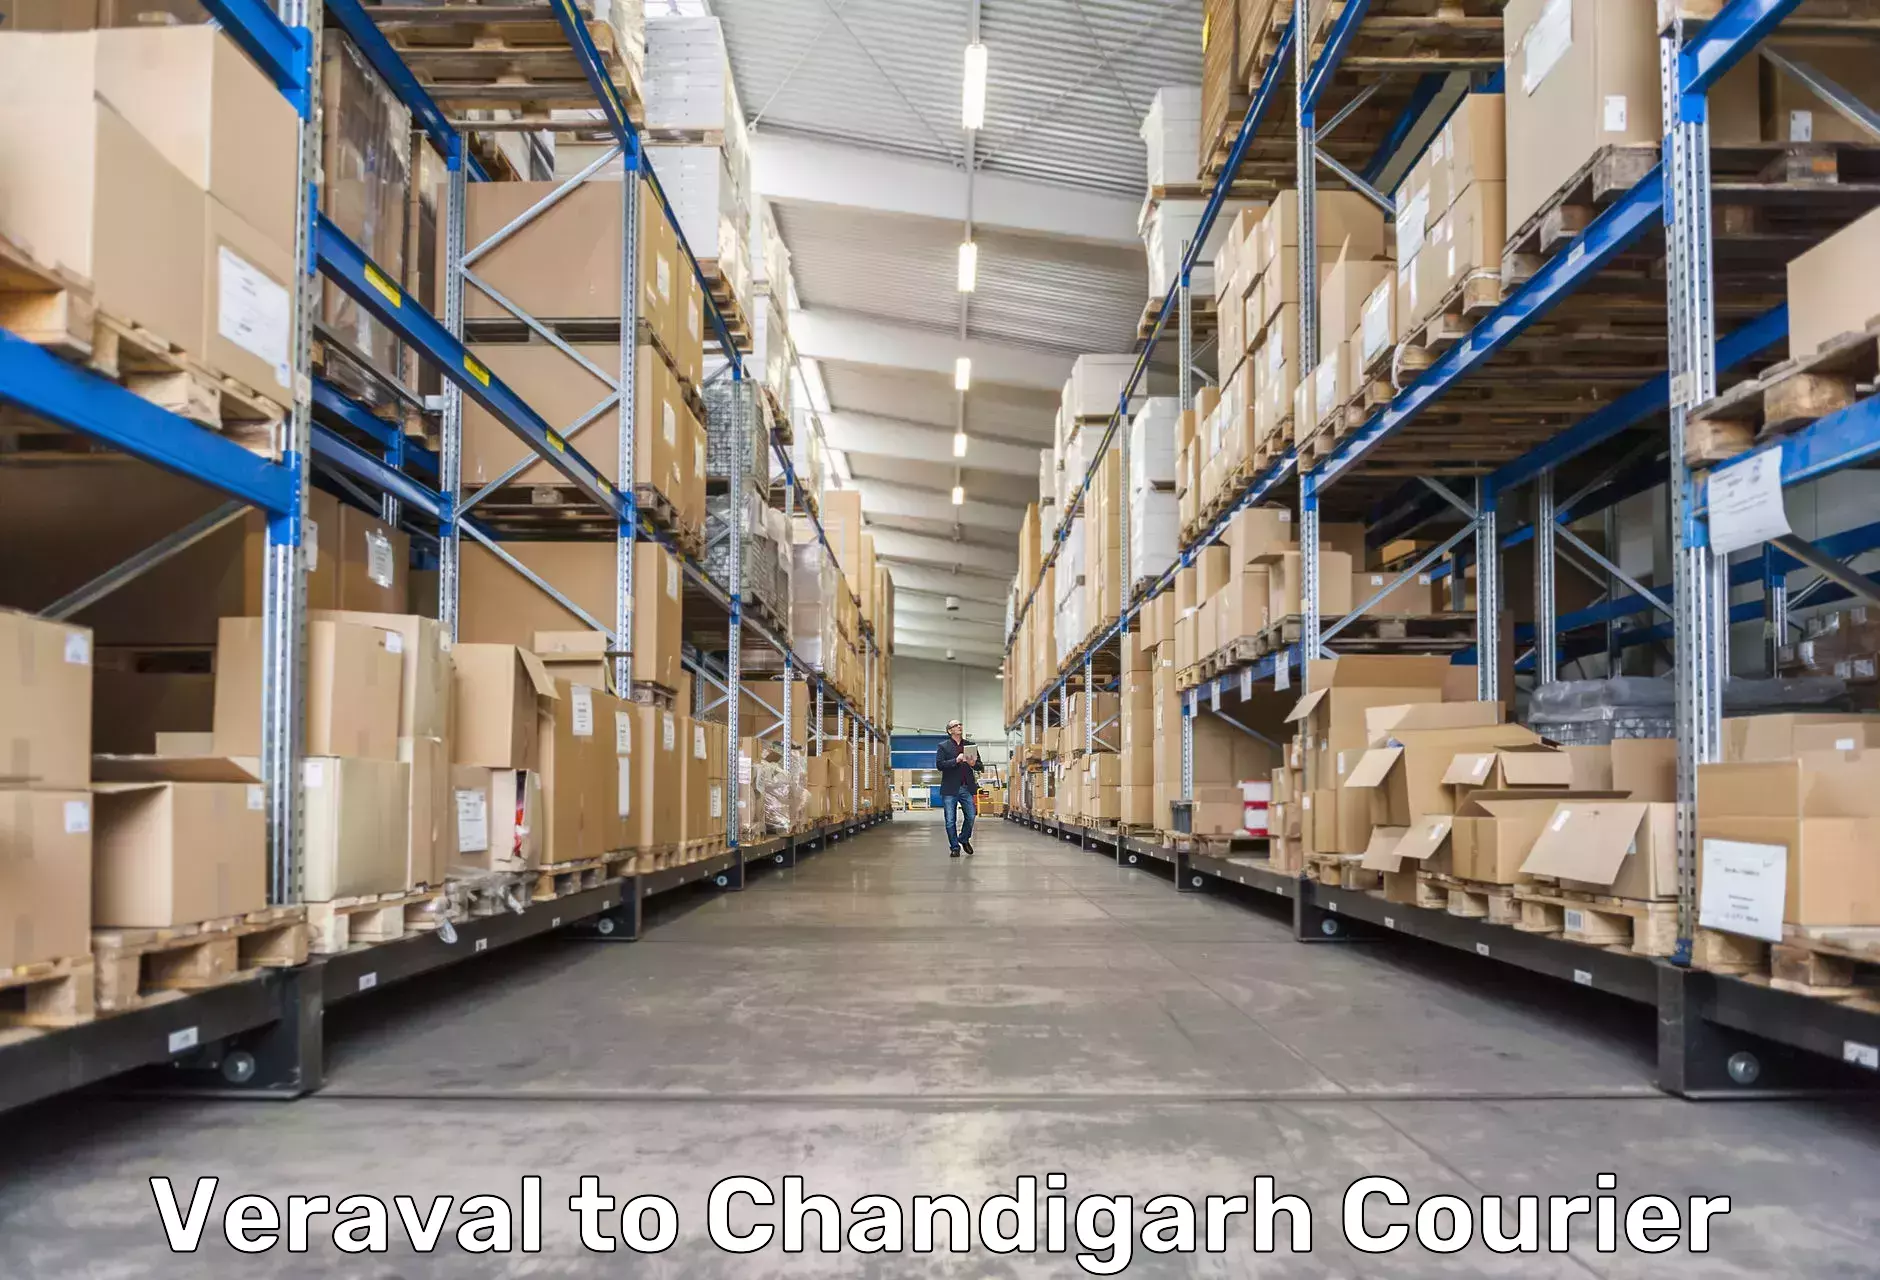 Local delivery service Veraval to Chandigarh